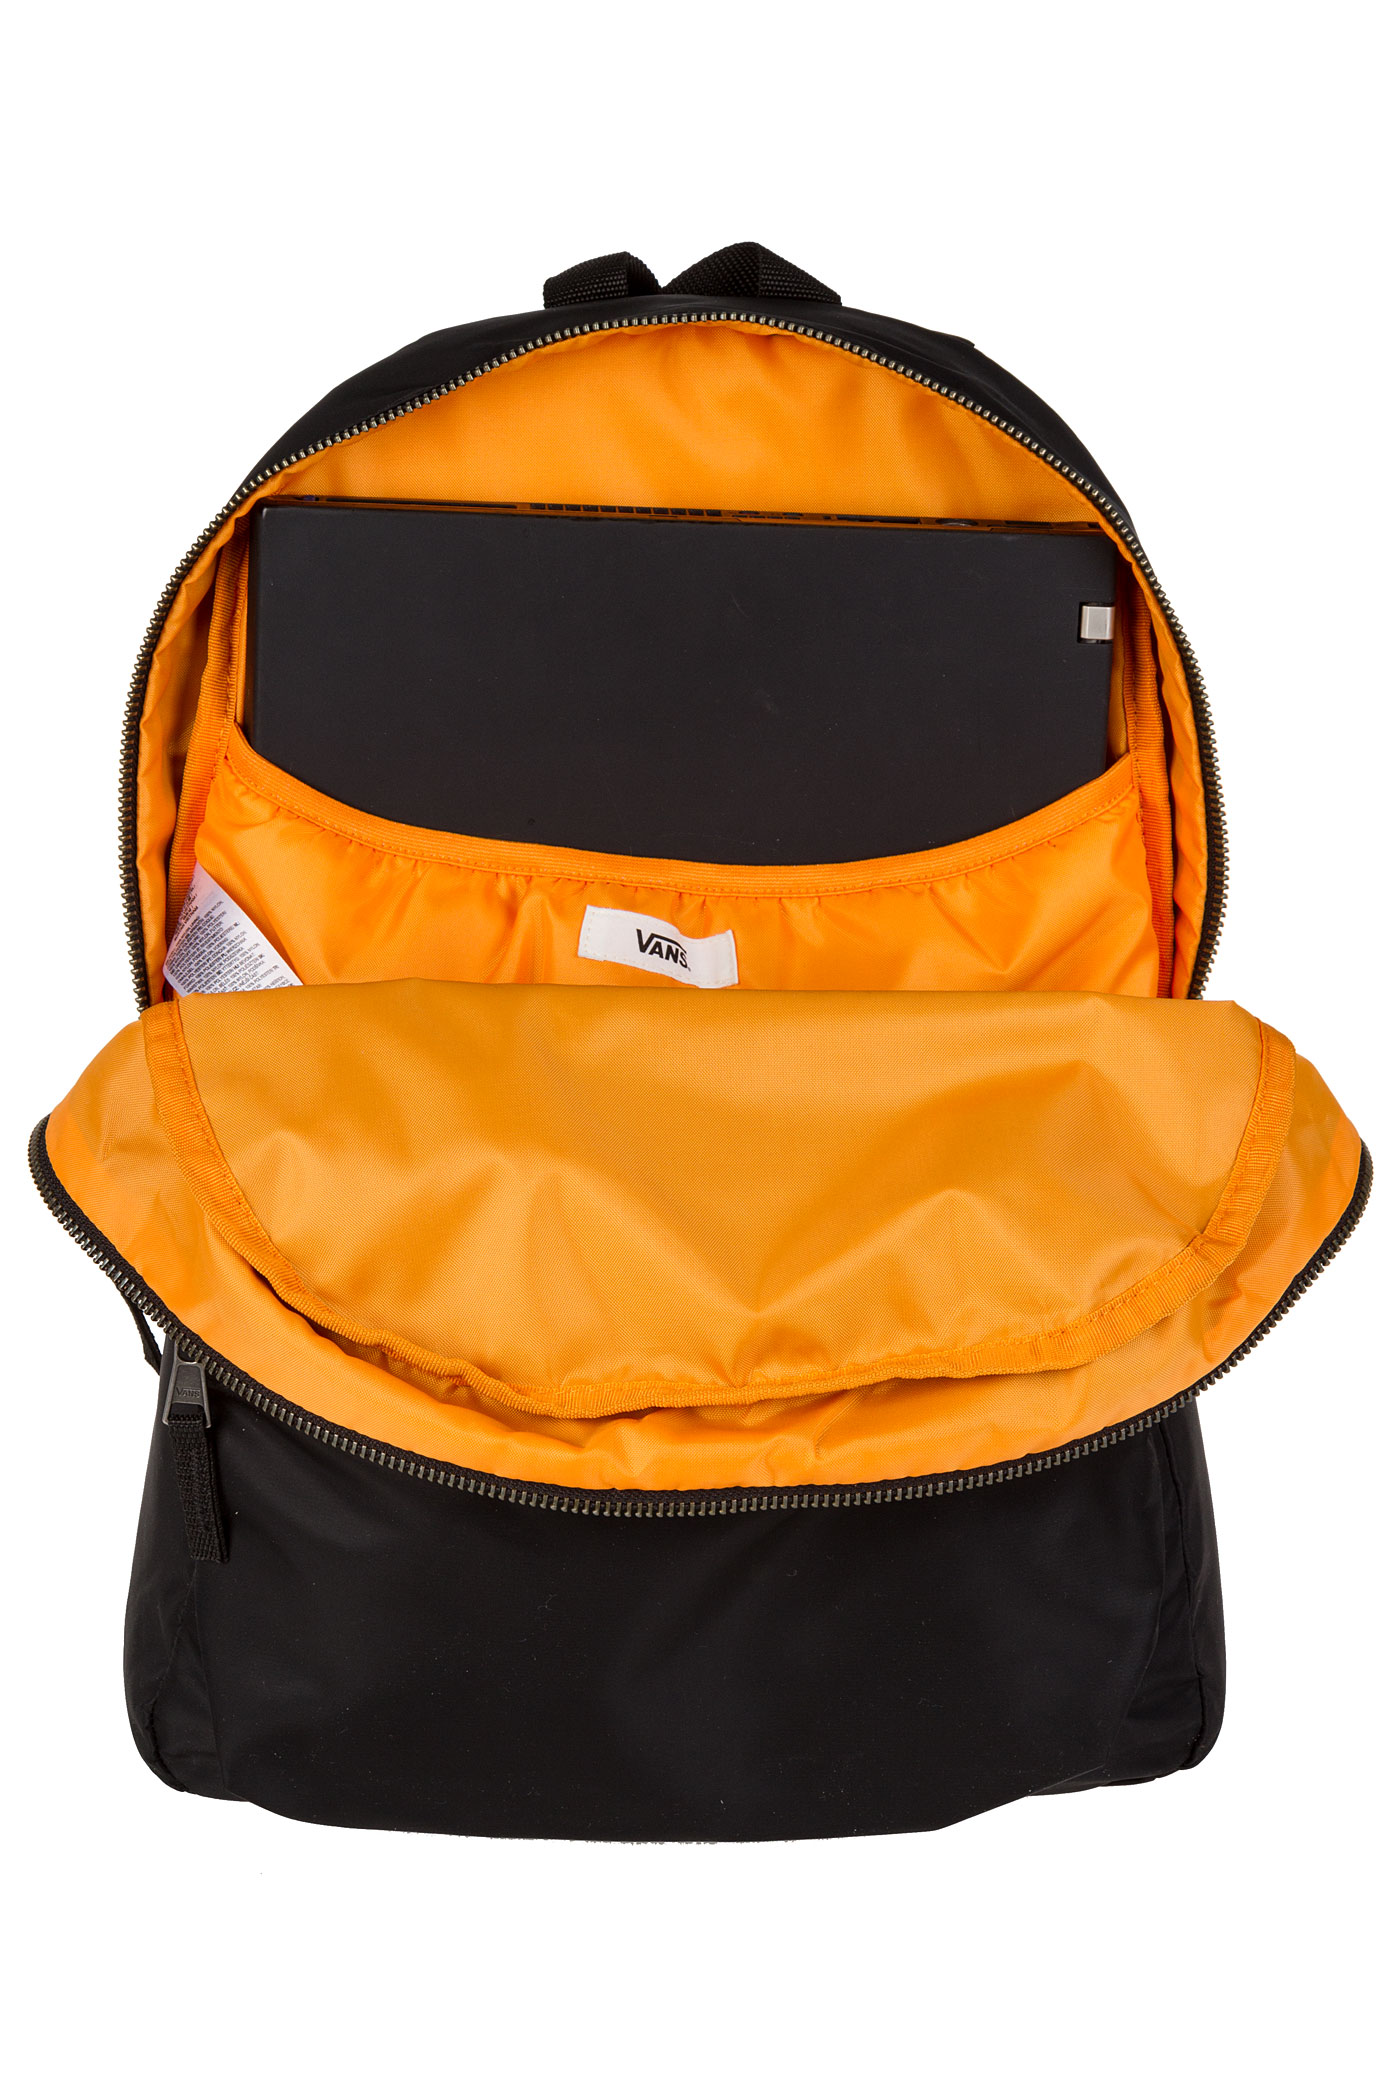 orange vans backpack \u003e OFF36% Discounts